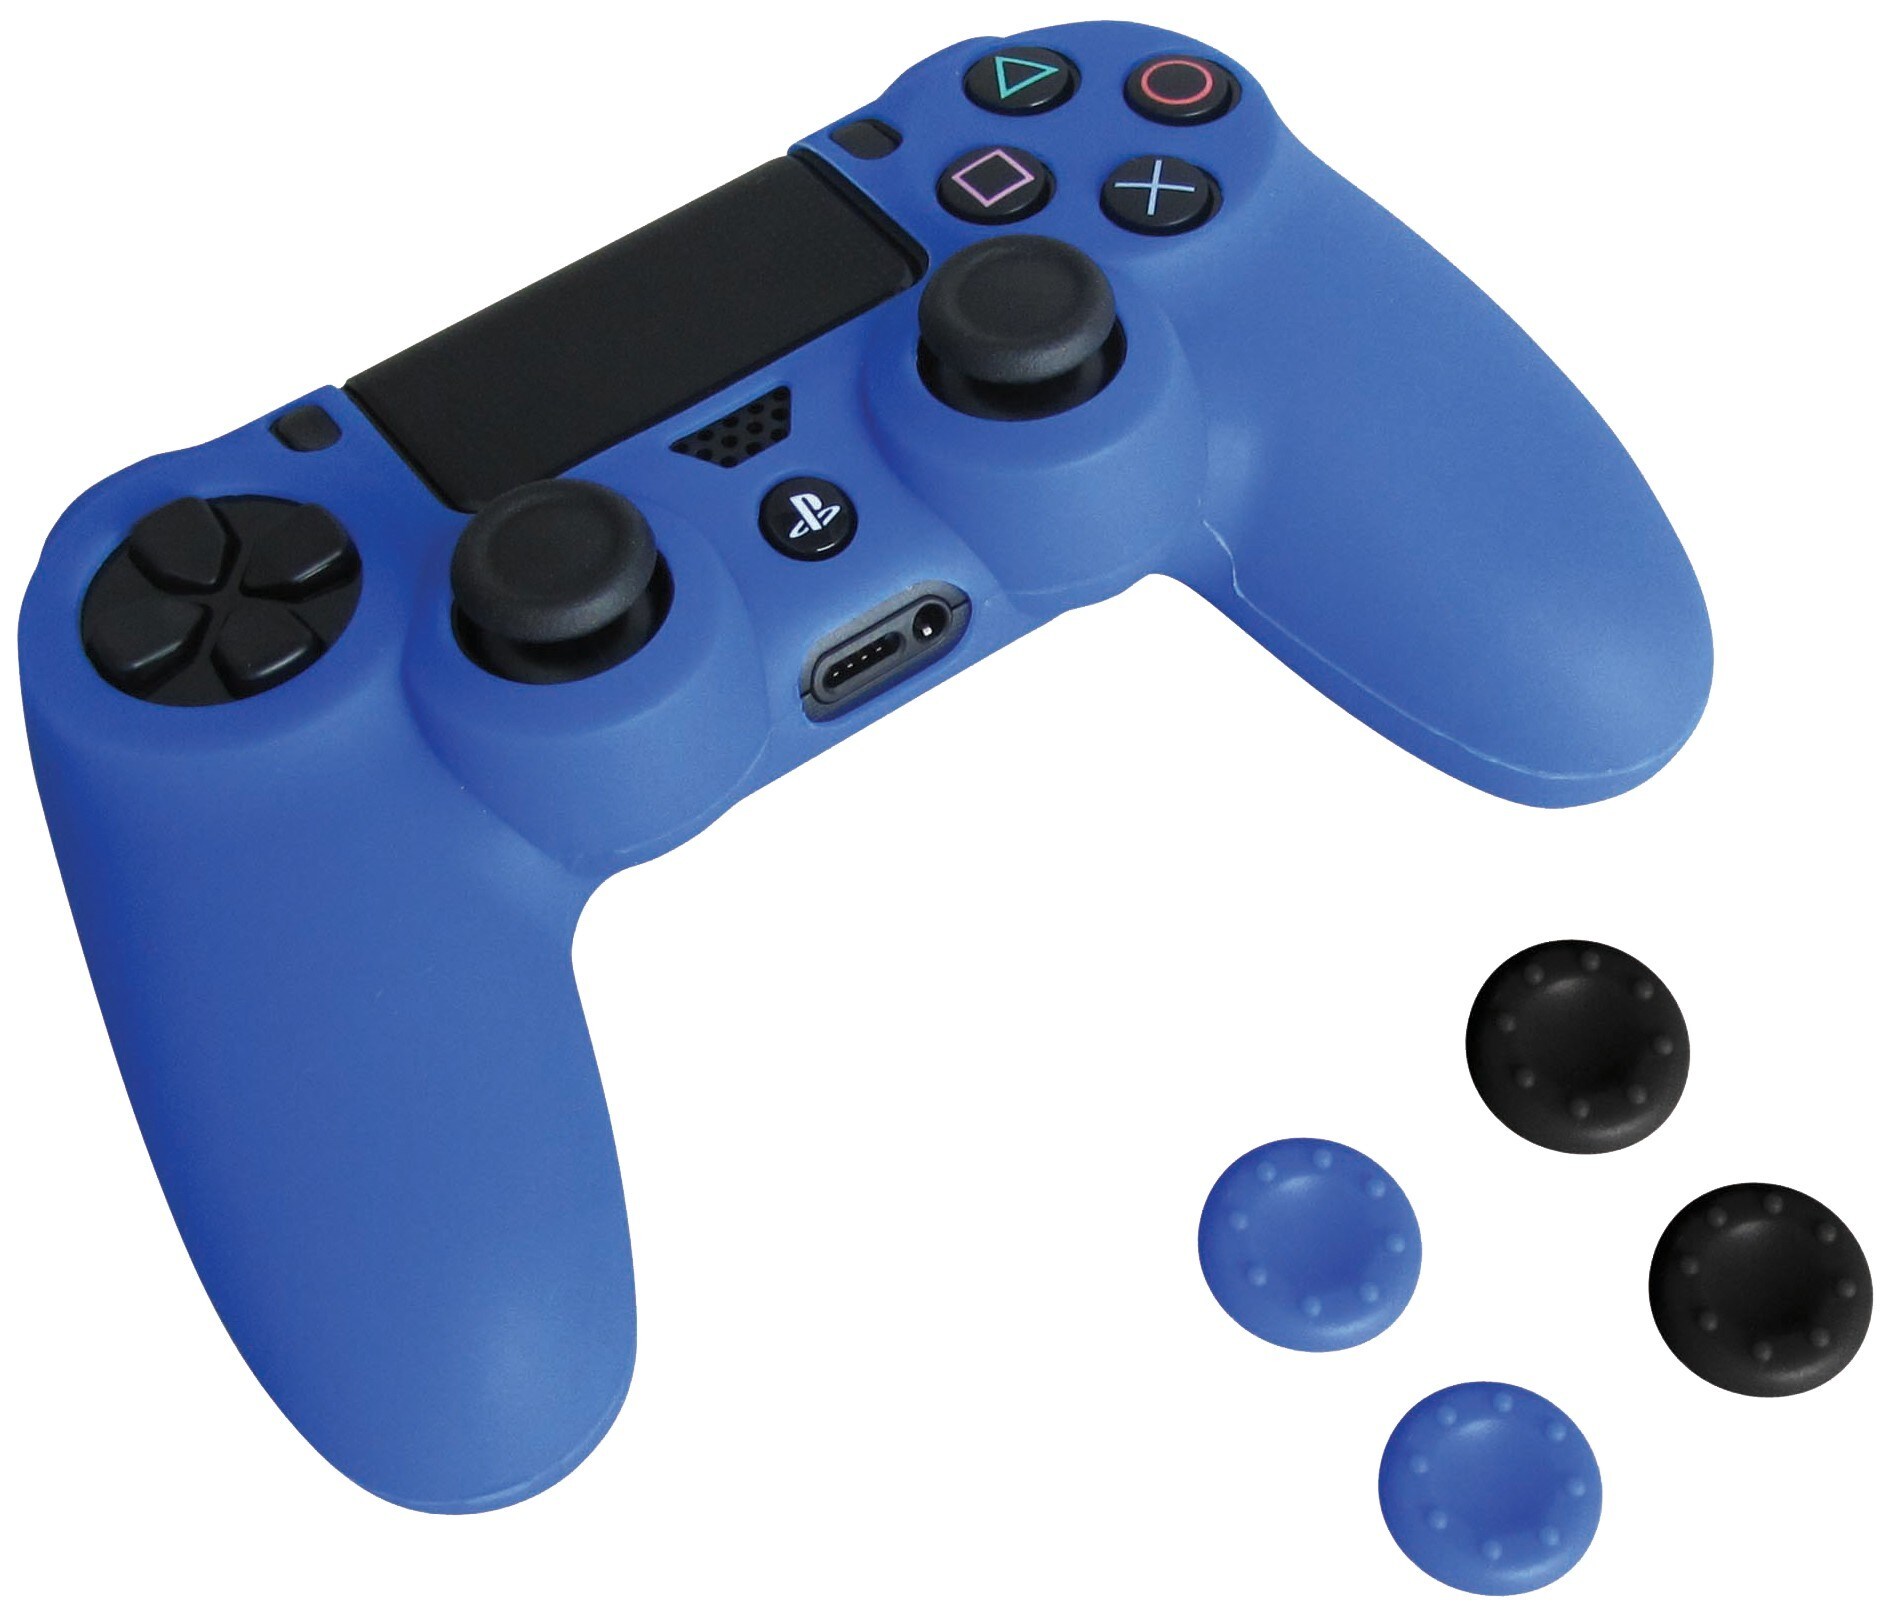 Logik PlayStation 4 tilbehørssett til håndkontroll - Elkjøp